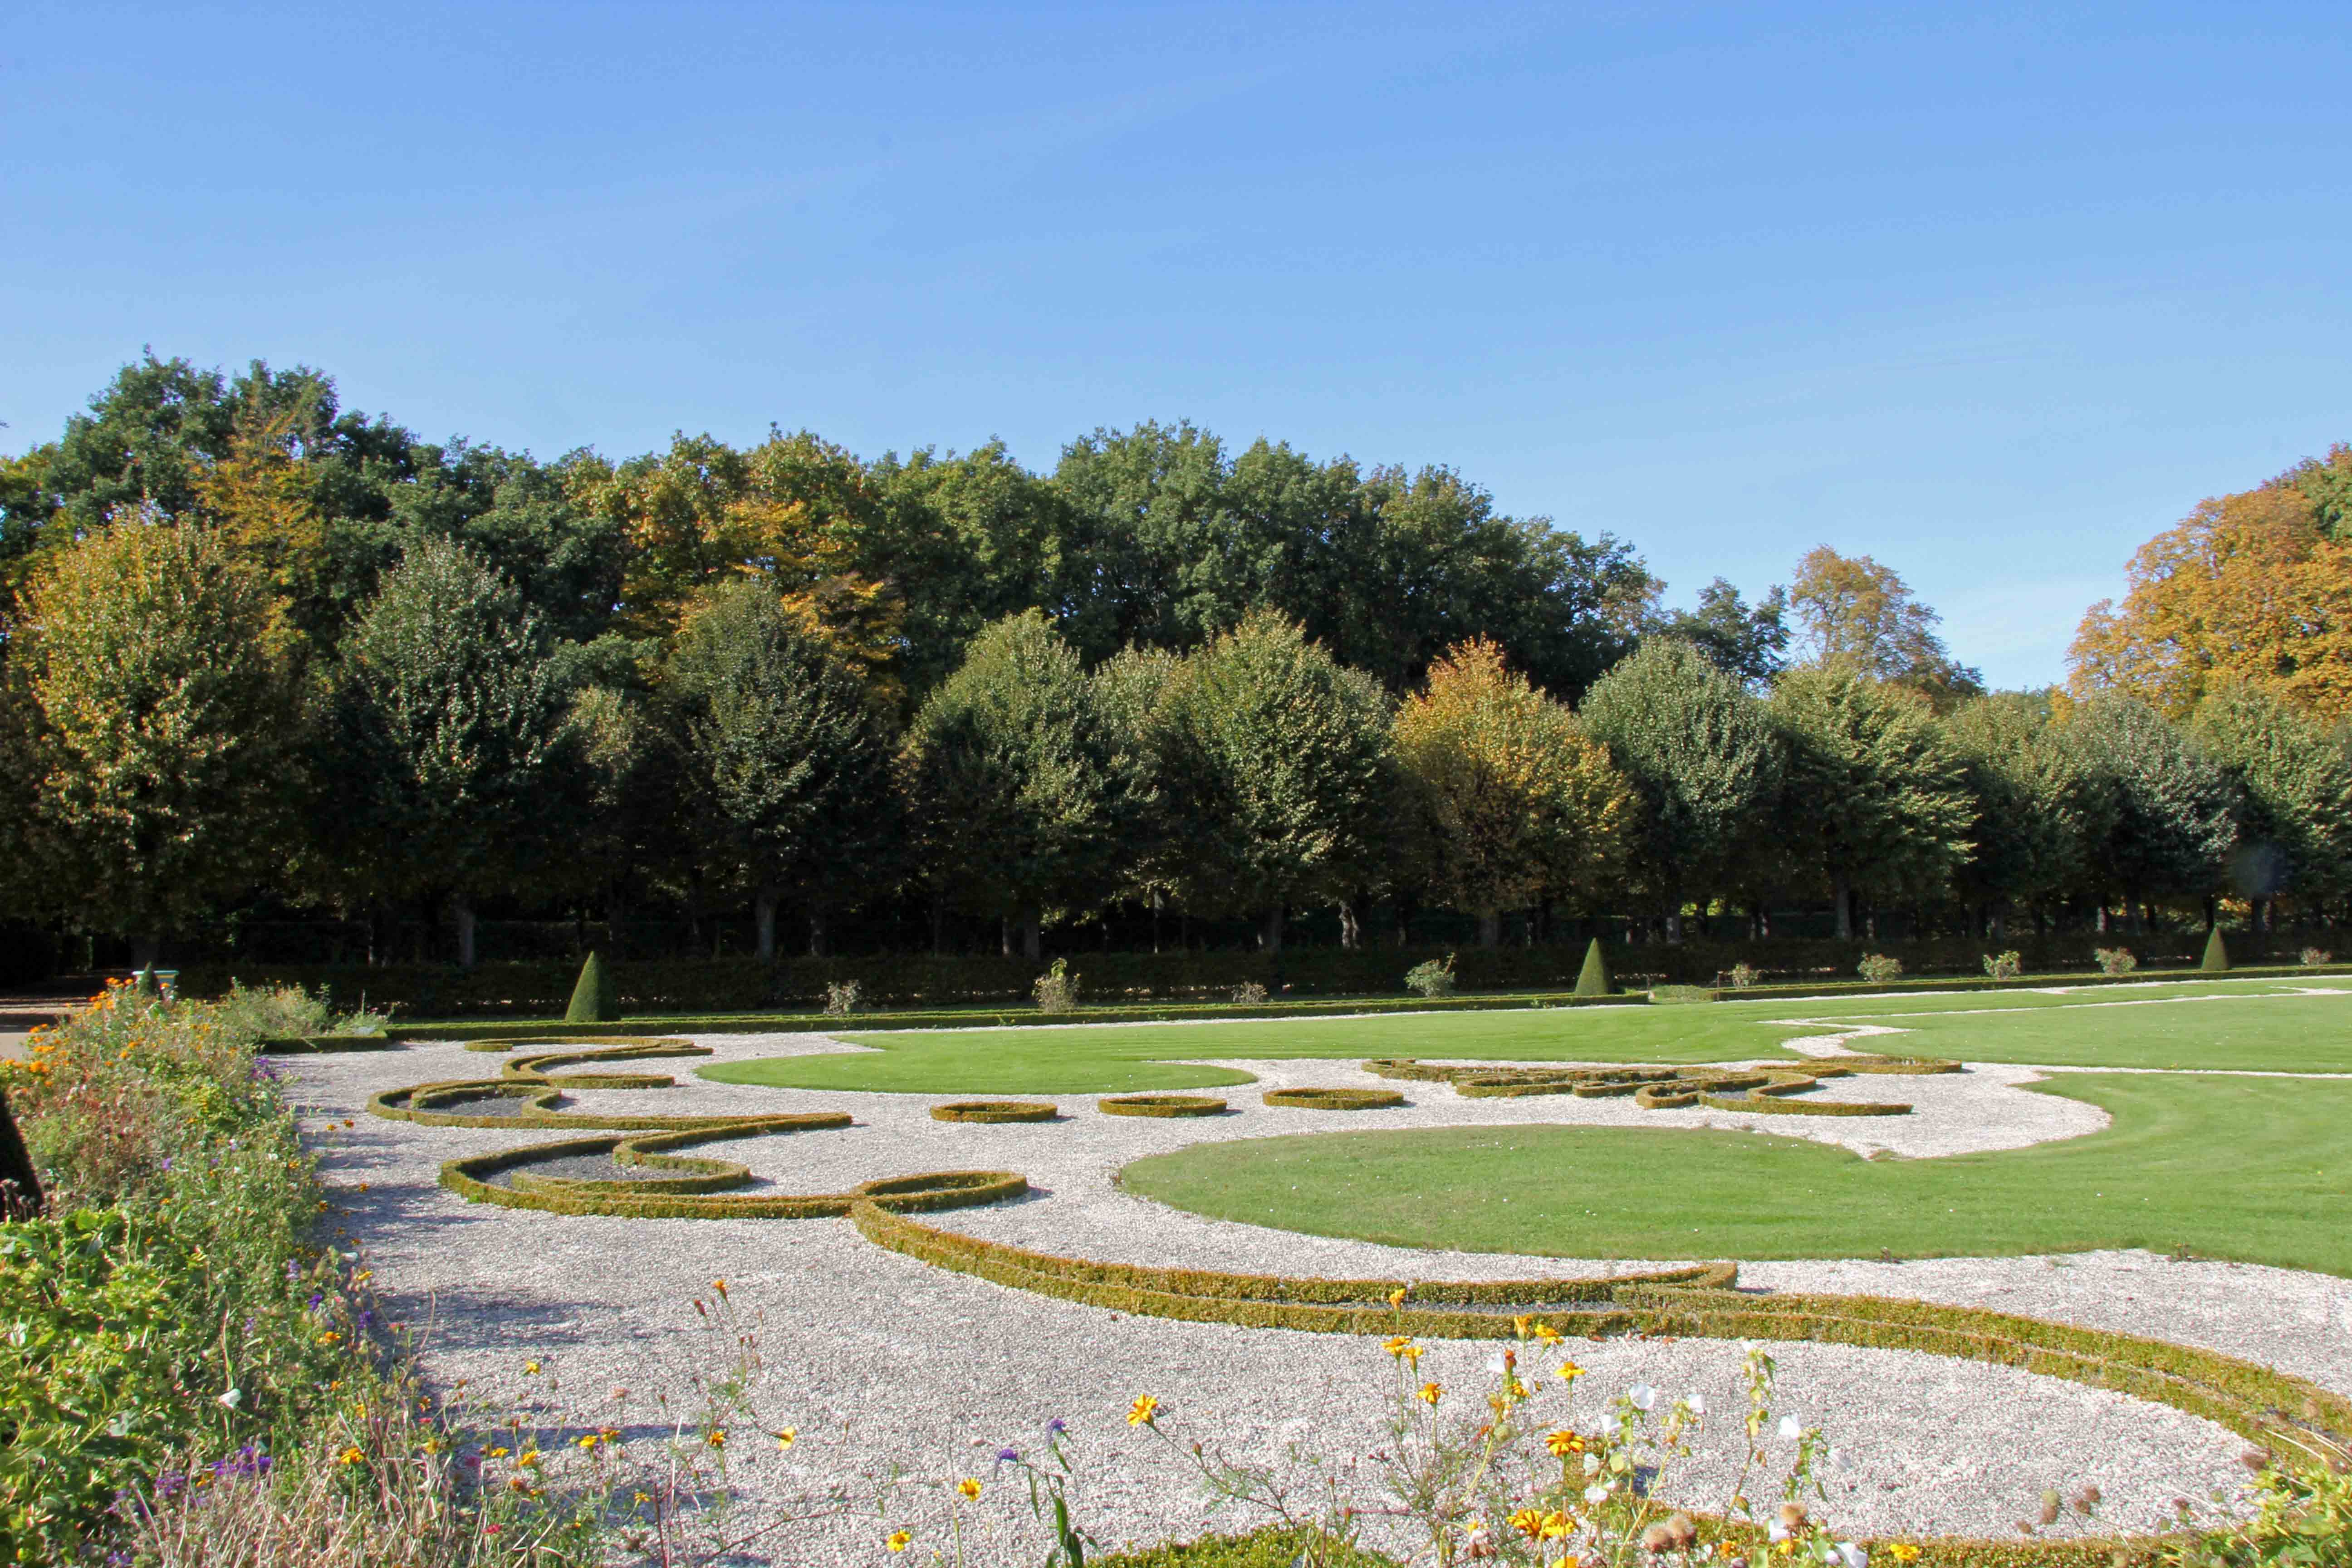 The Palace Gardens of Schloss Charlottenburg in Berlin